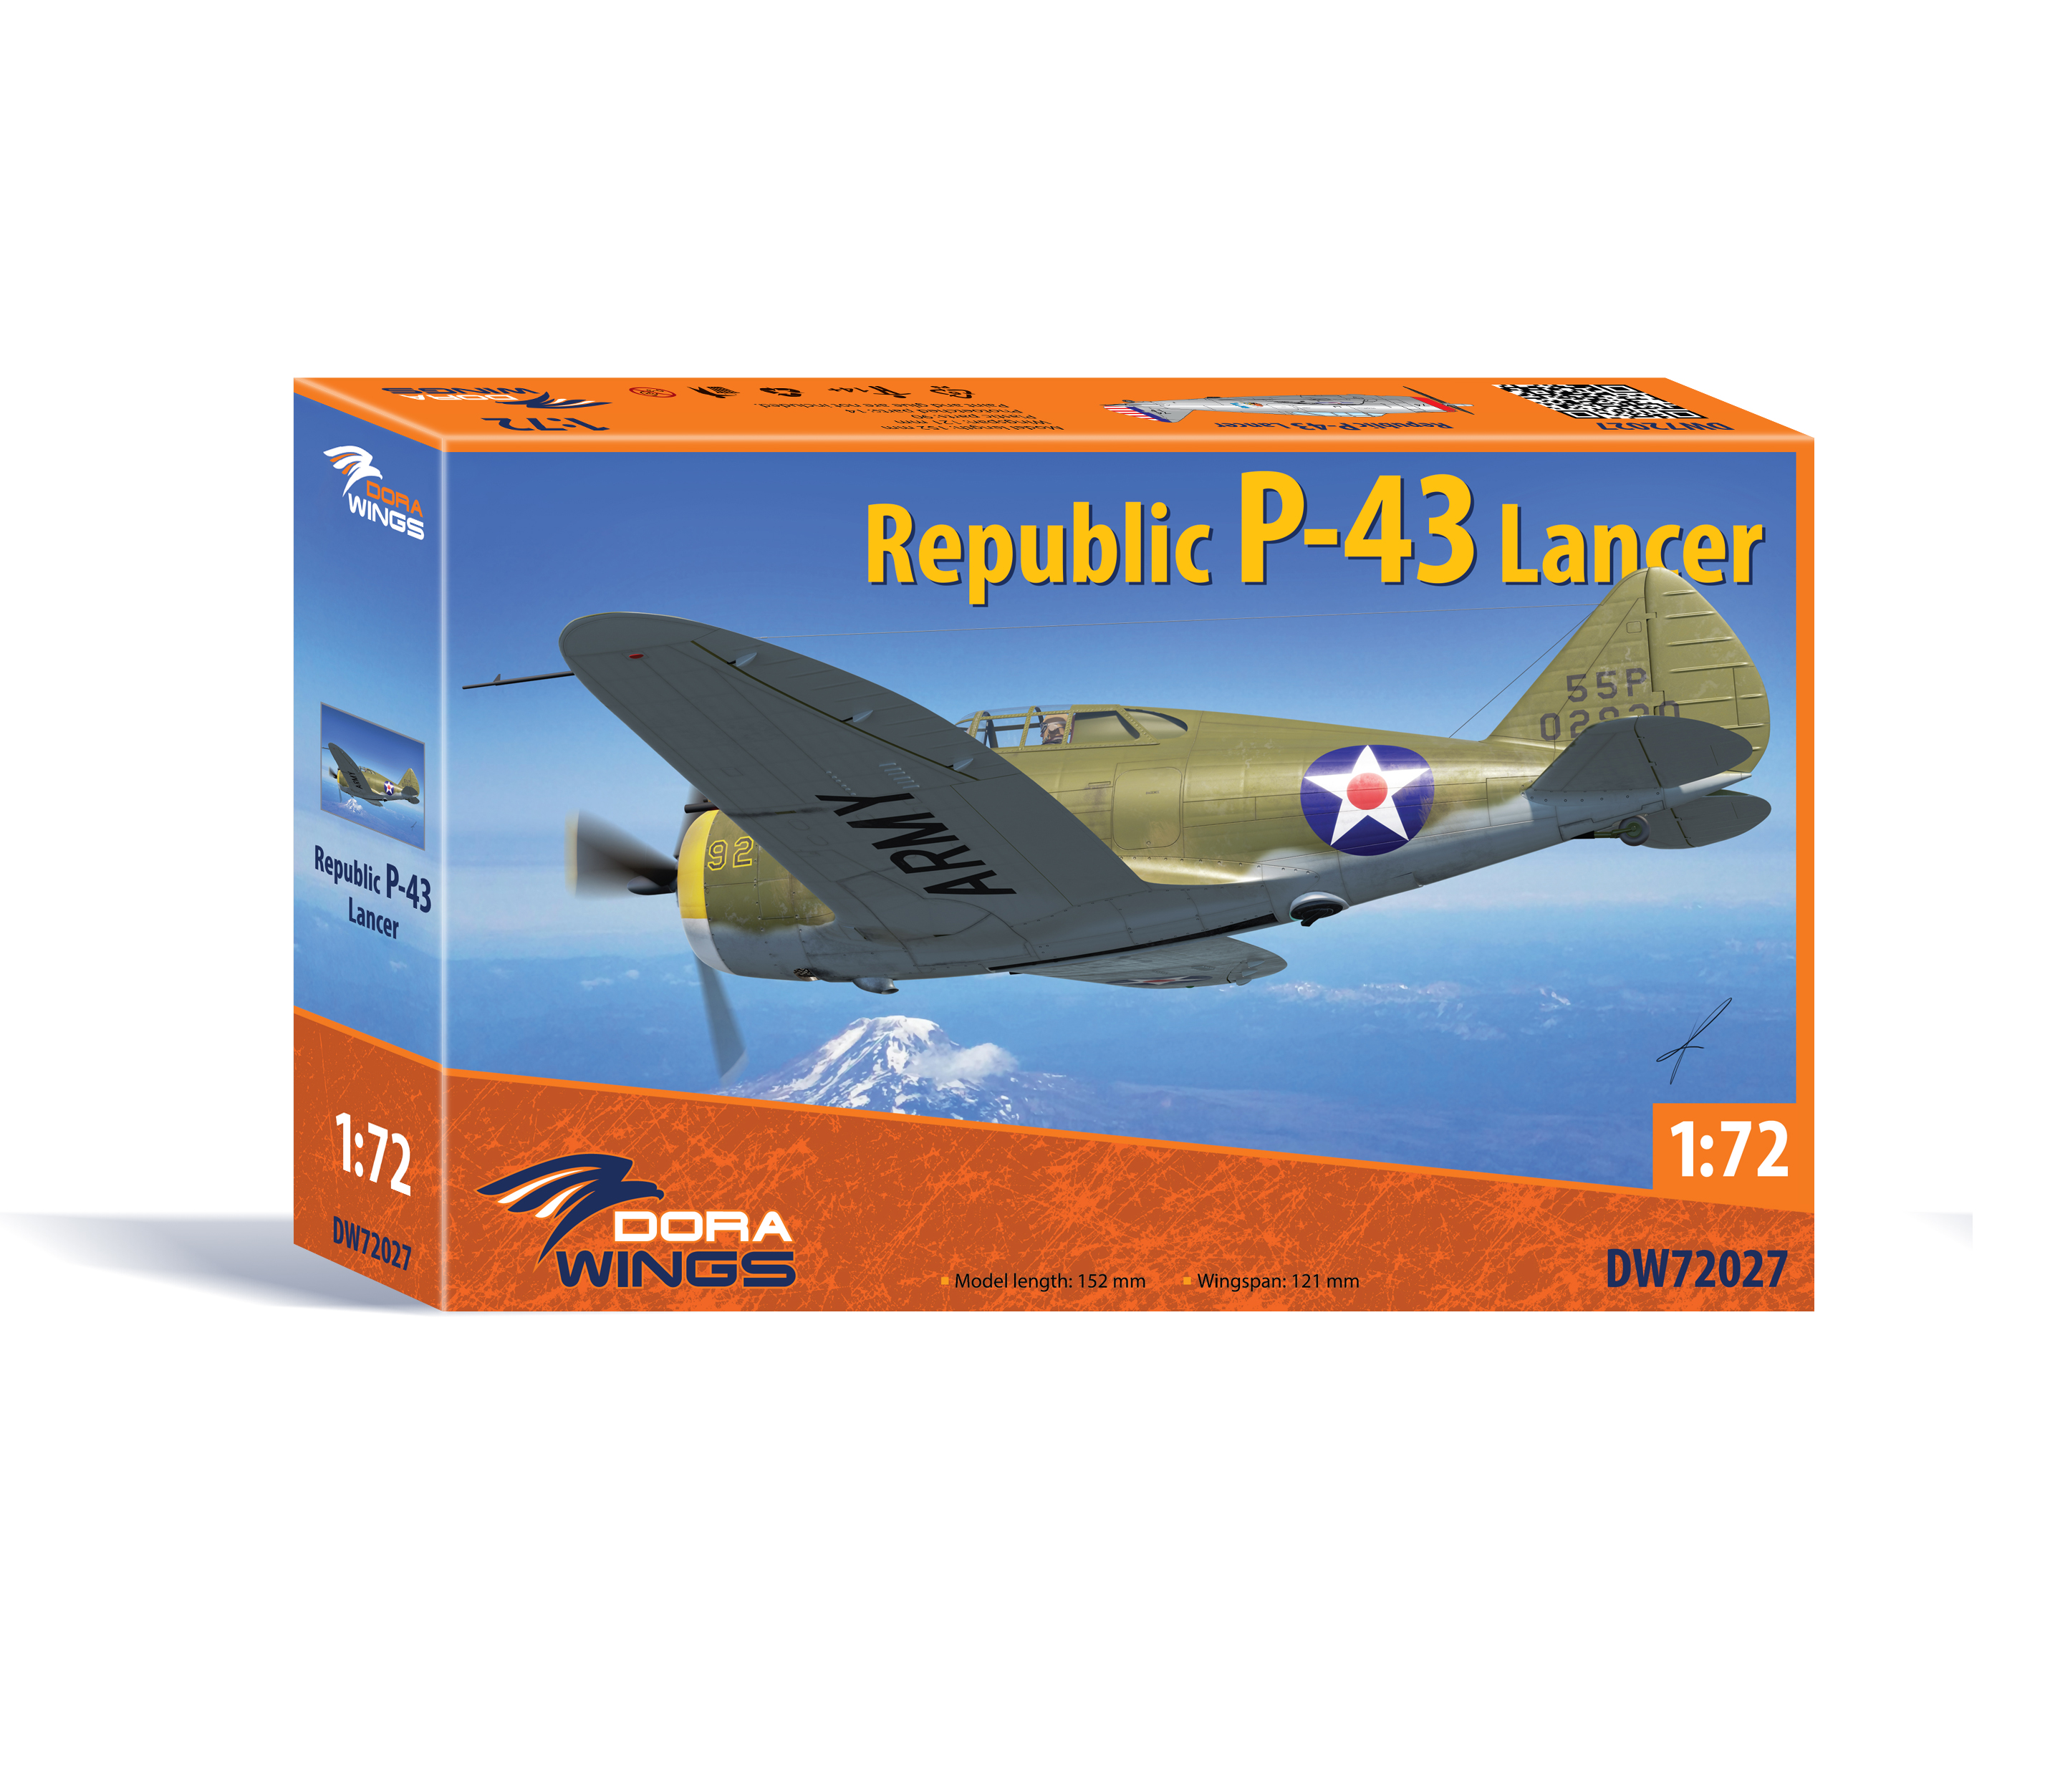 Republic P-43 Lancer (DW72027)